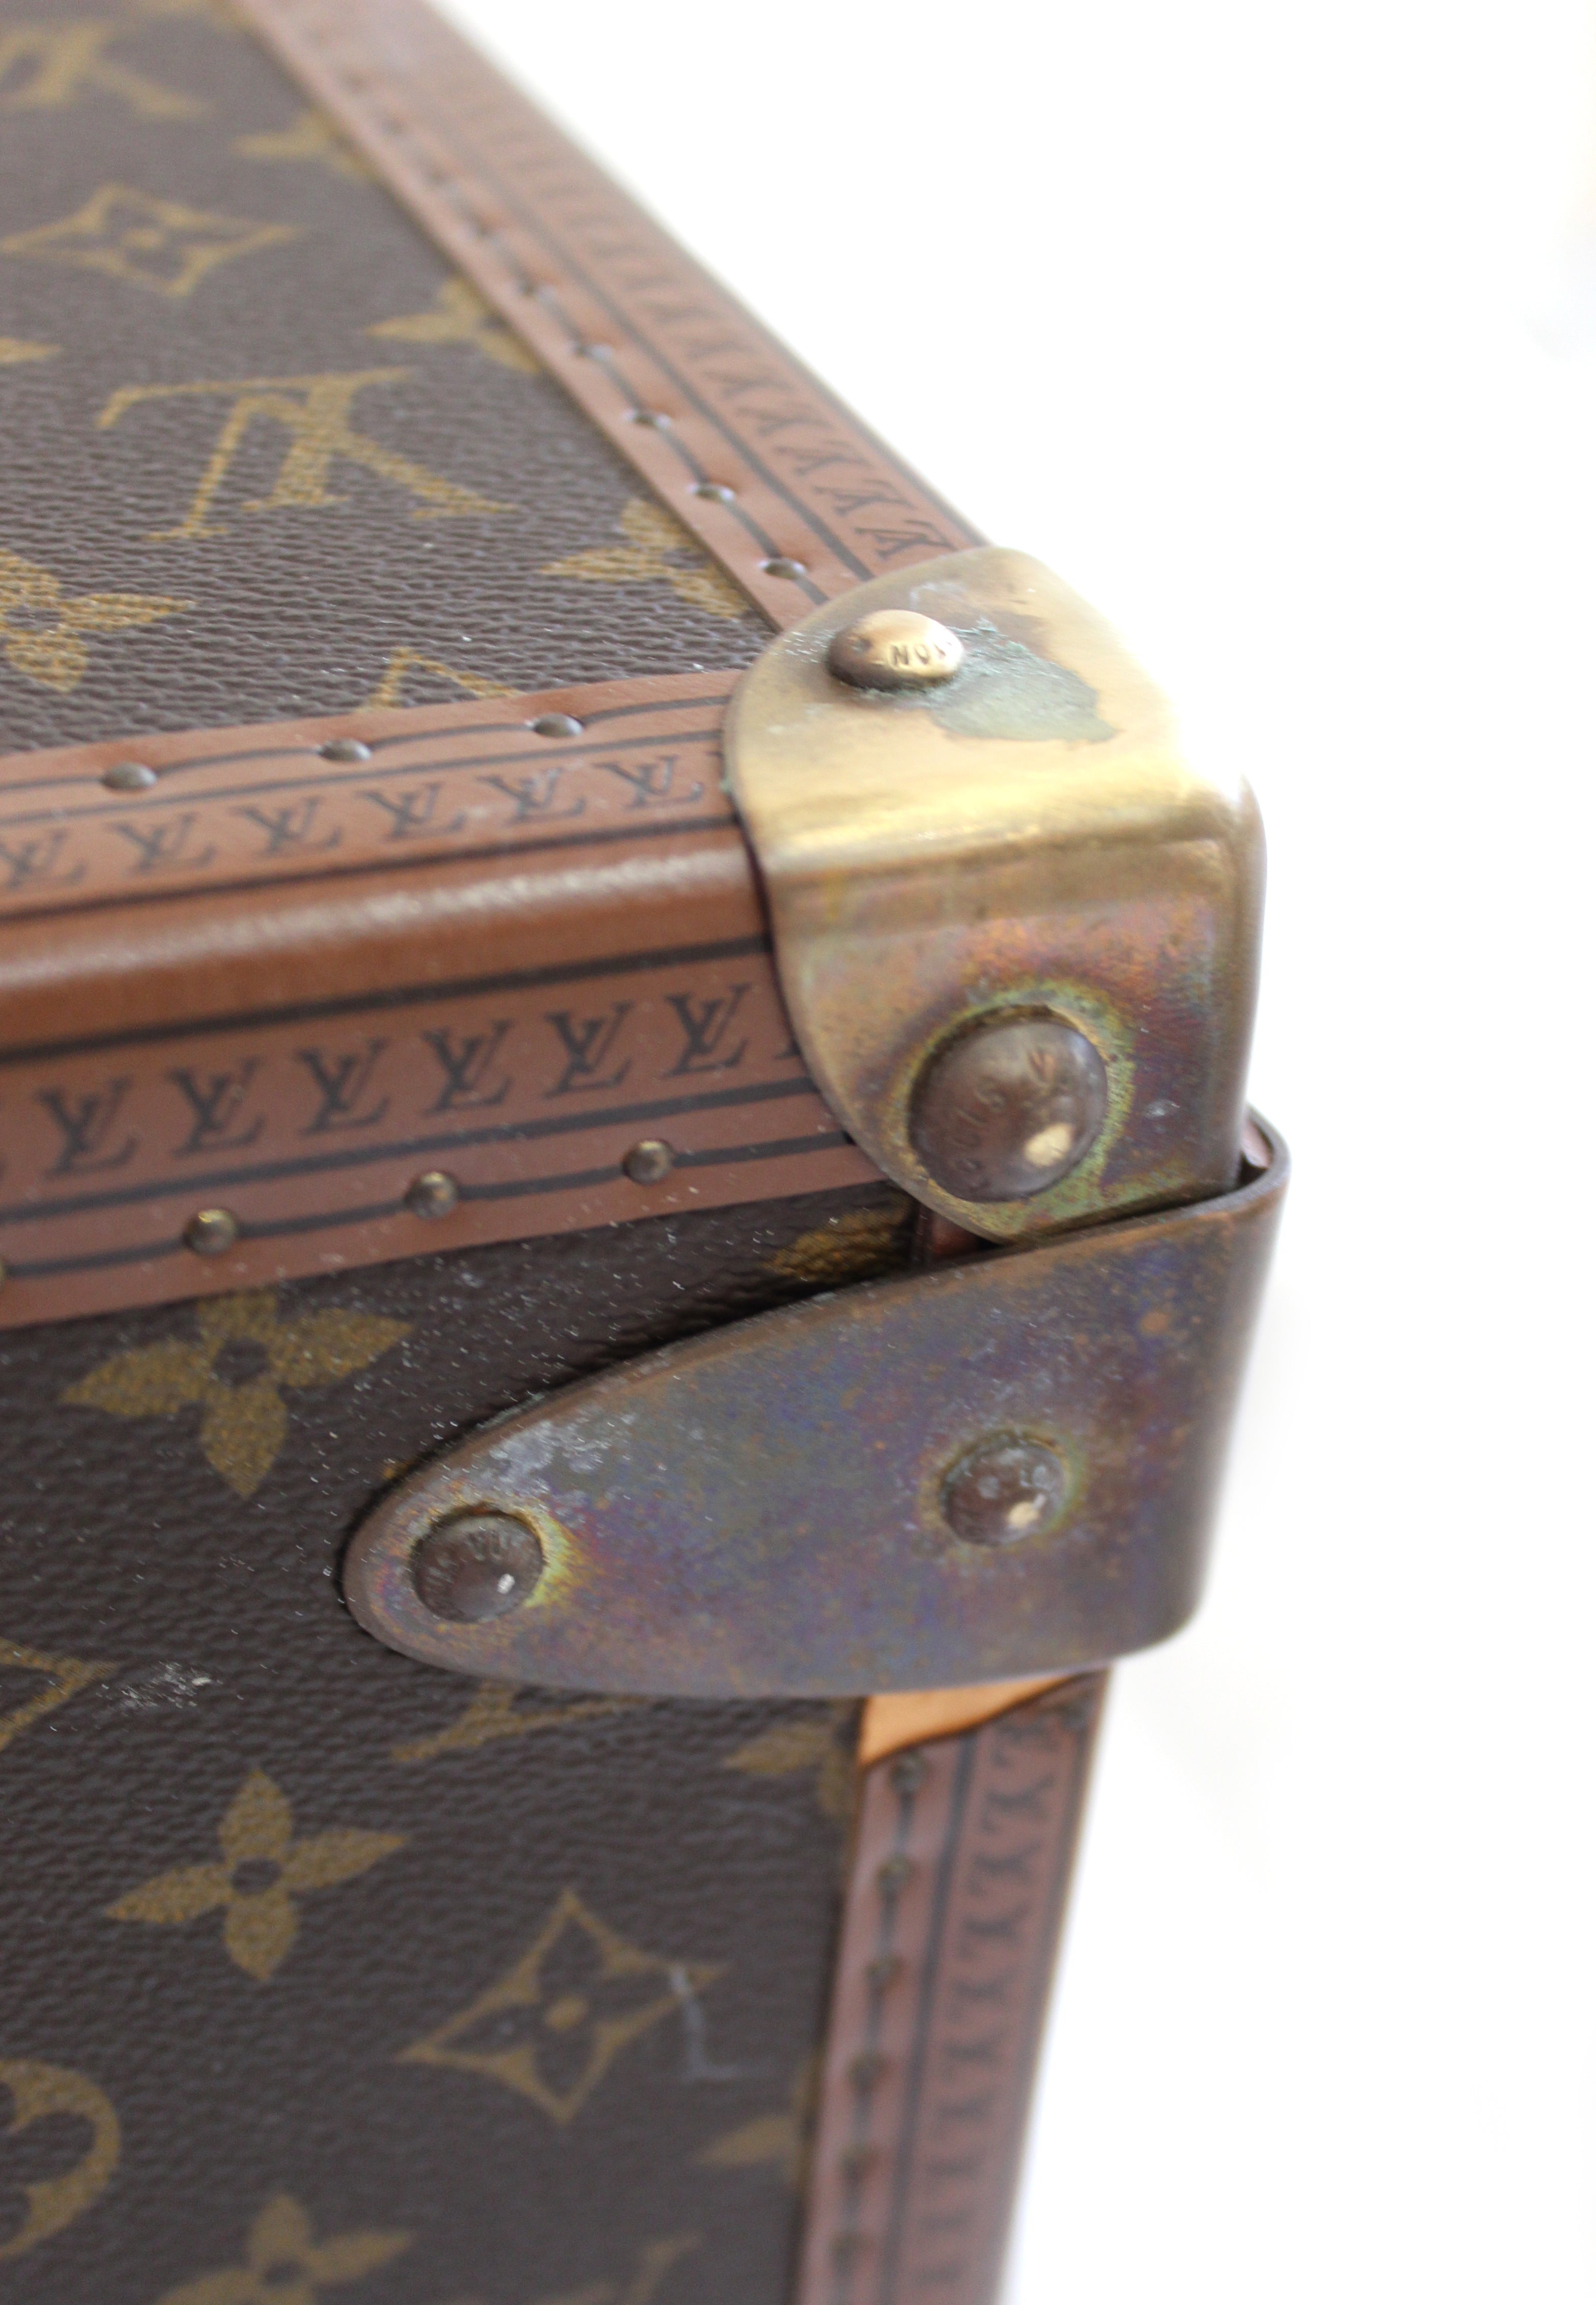 Authentic Louis Vuitton Monogram Alzer 80 Trunk Hard Case Suitcase